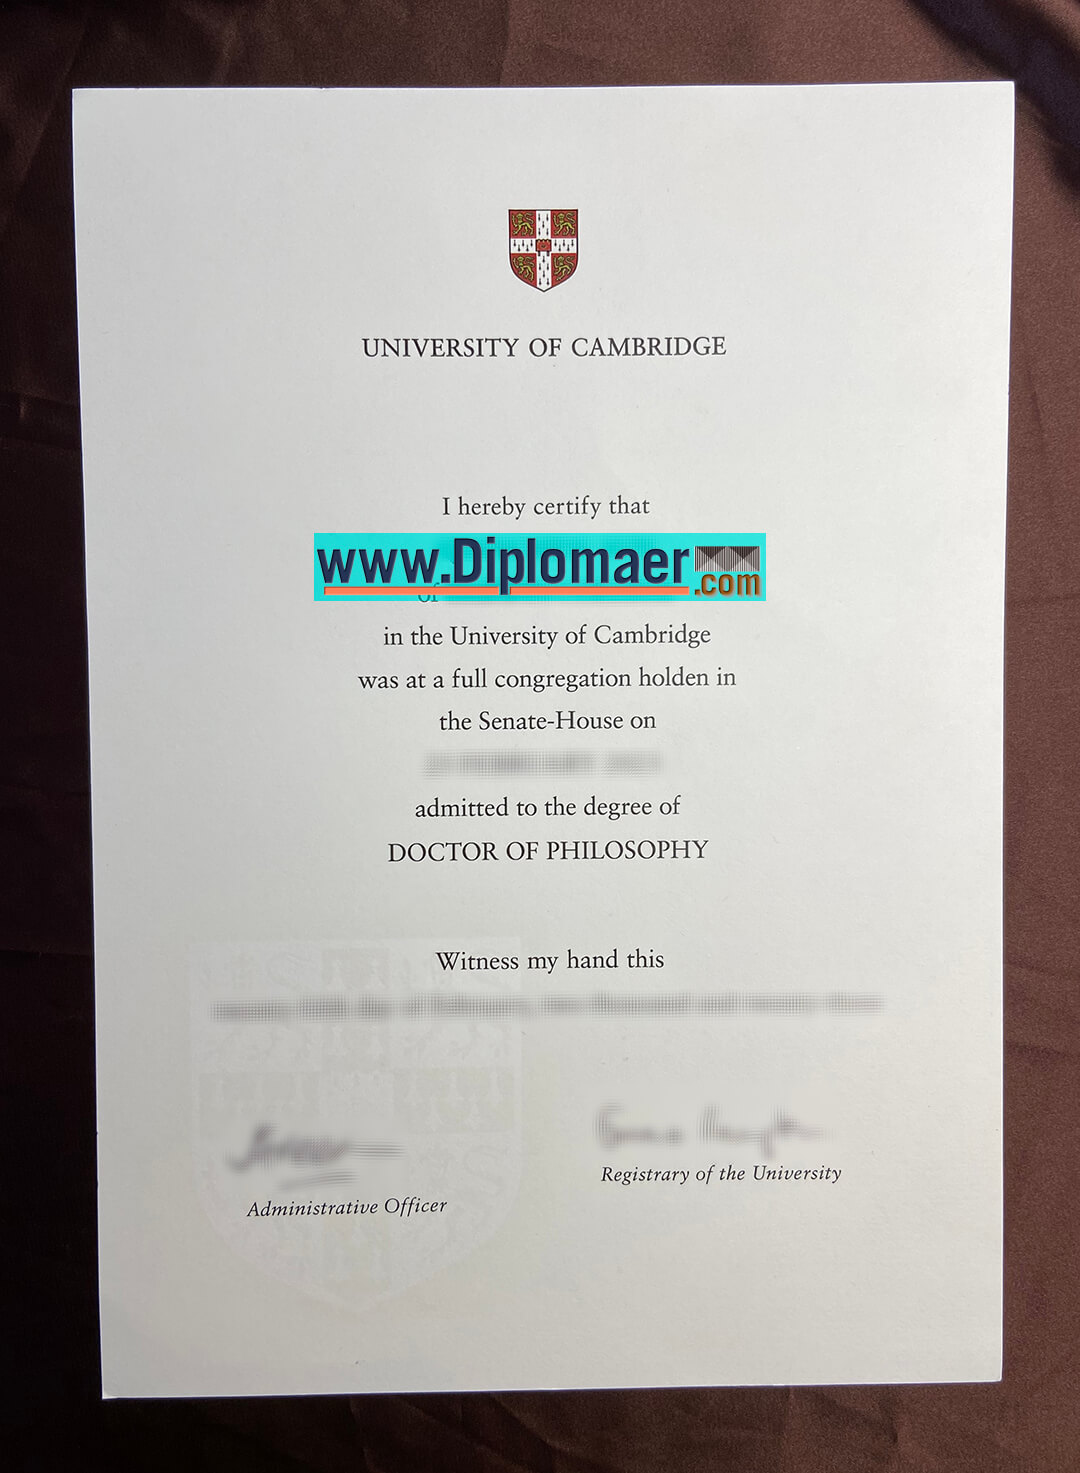 University of Cambridge Fake Diploma - How to make the watermark on the University of Cambridge diploma?